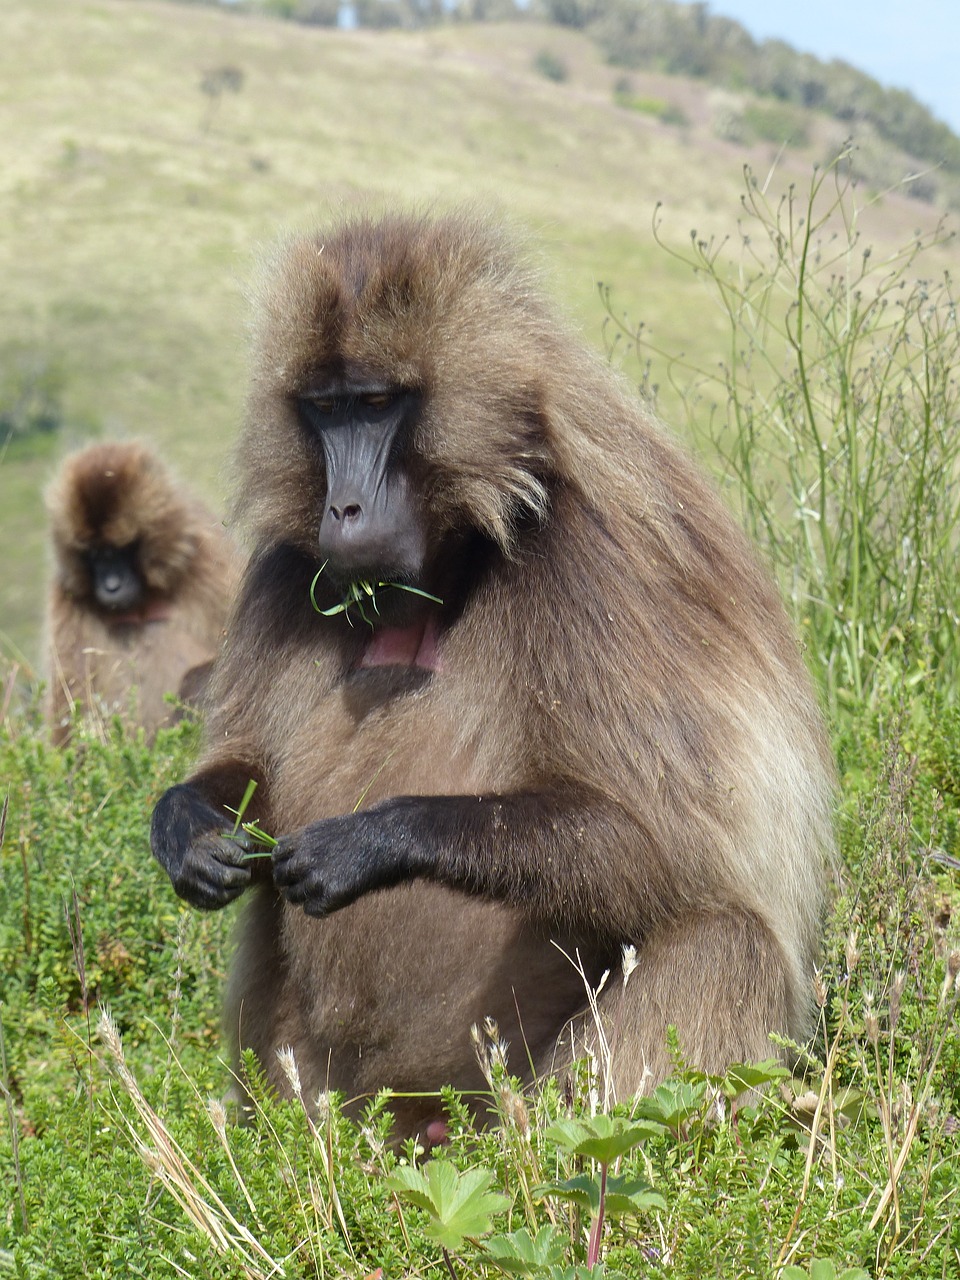 Baboon in Ethiopia